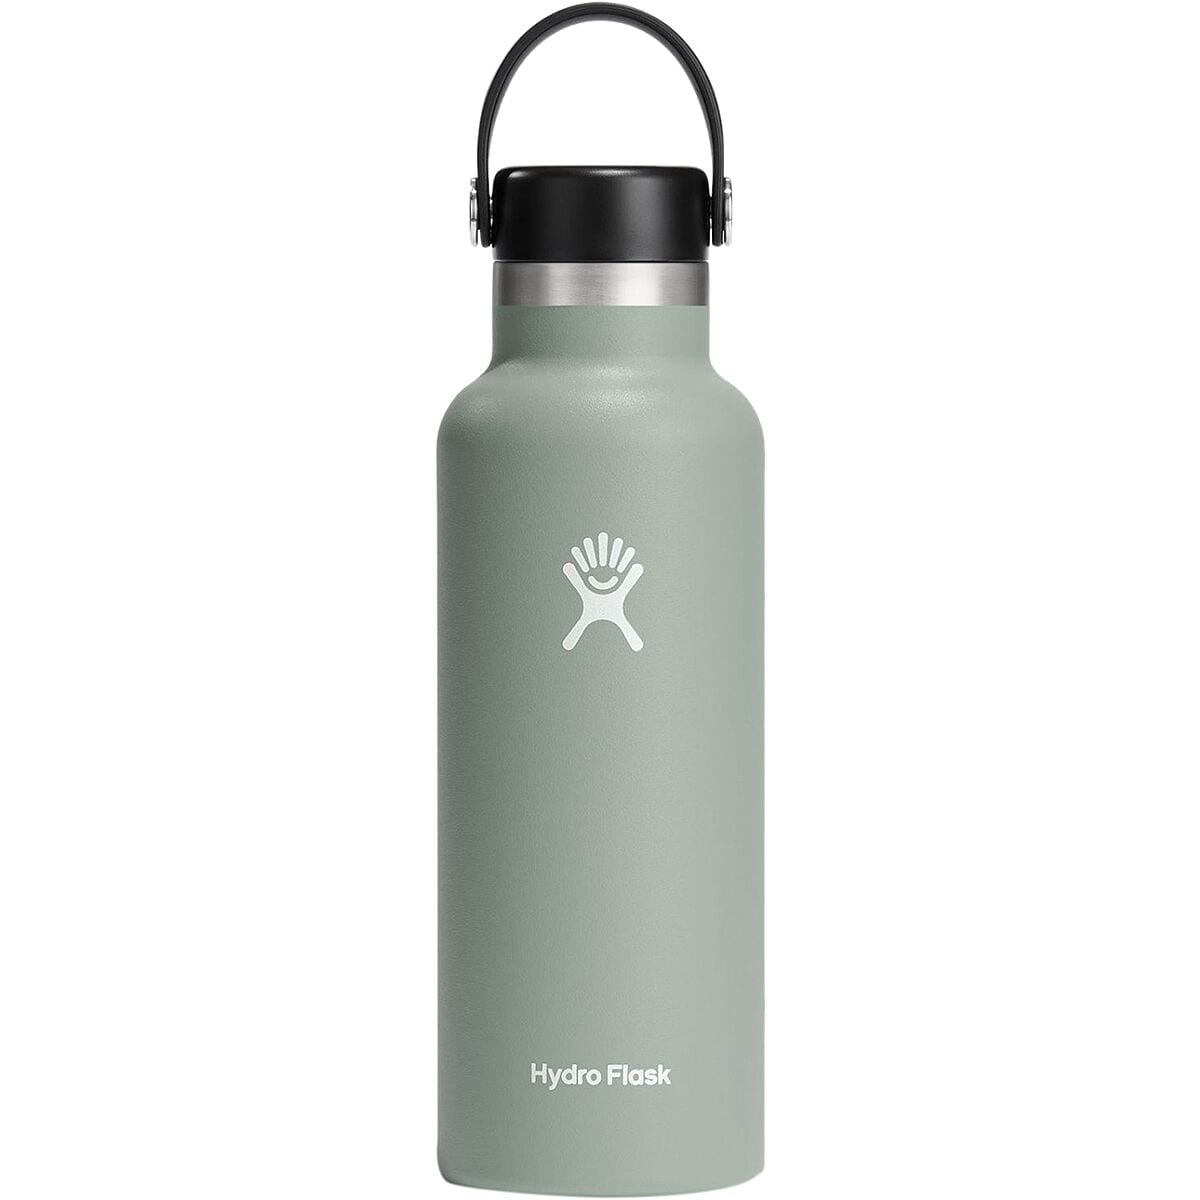 Стандартная бутылка для воды для полости рта Hydro Flask на 18 унций Hydro Flask